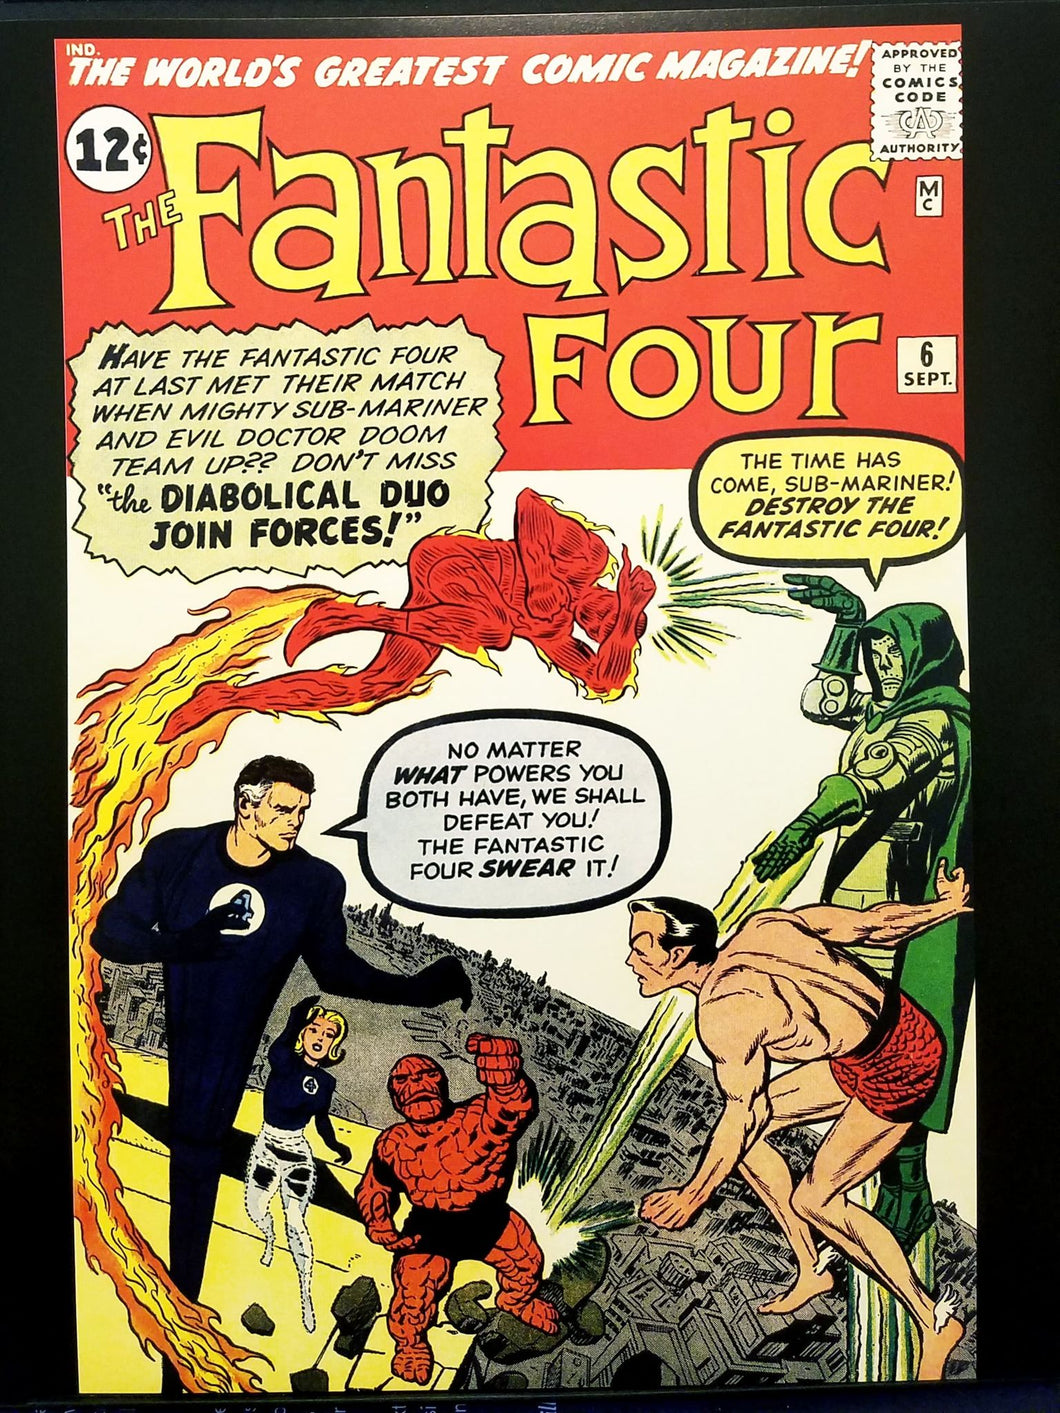 Fantastic Four #6 by Jack Kirby 11x14 FRAMED Art Print, Vintage Marvel Comics